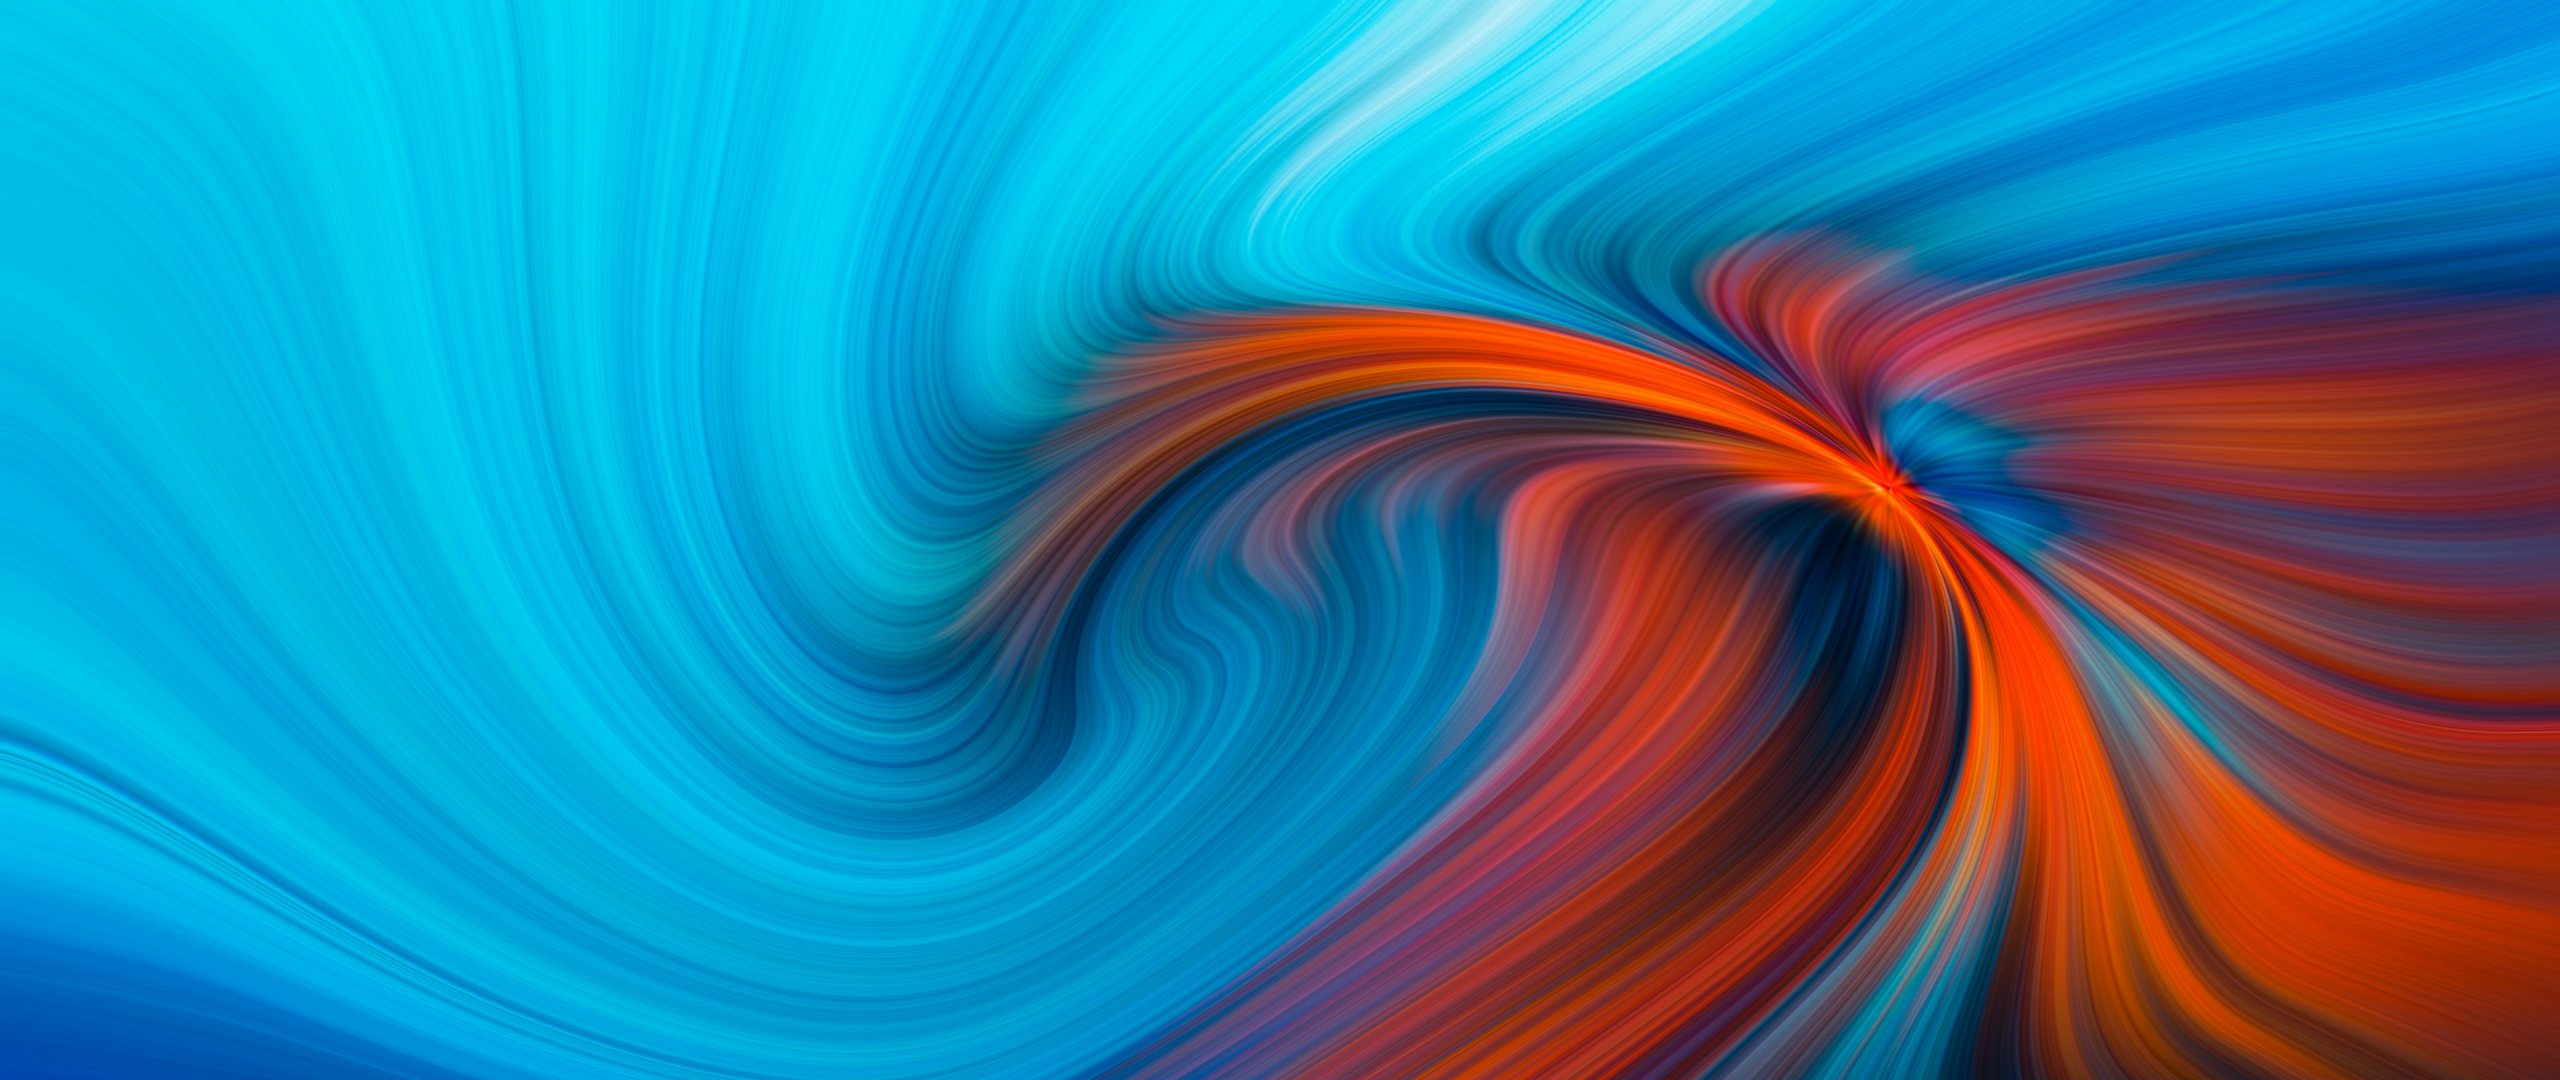 Blue orange swirl, pattern, abstraction, 2560x1080 wallpaper